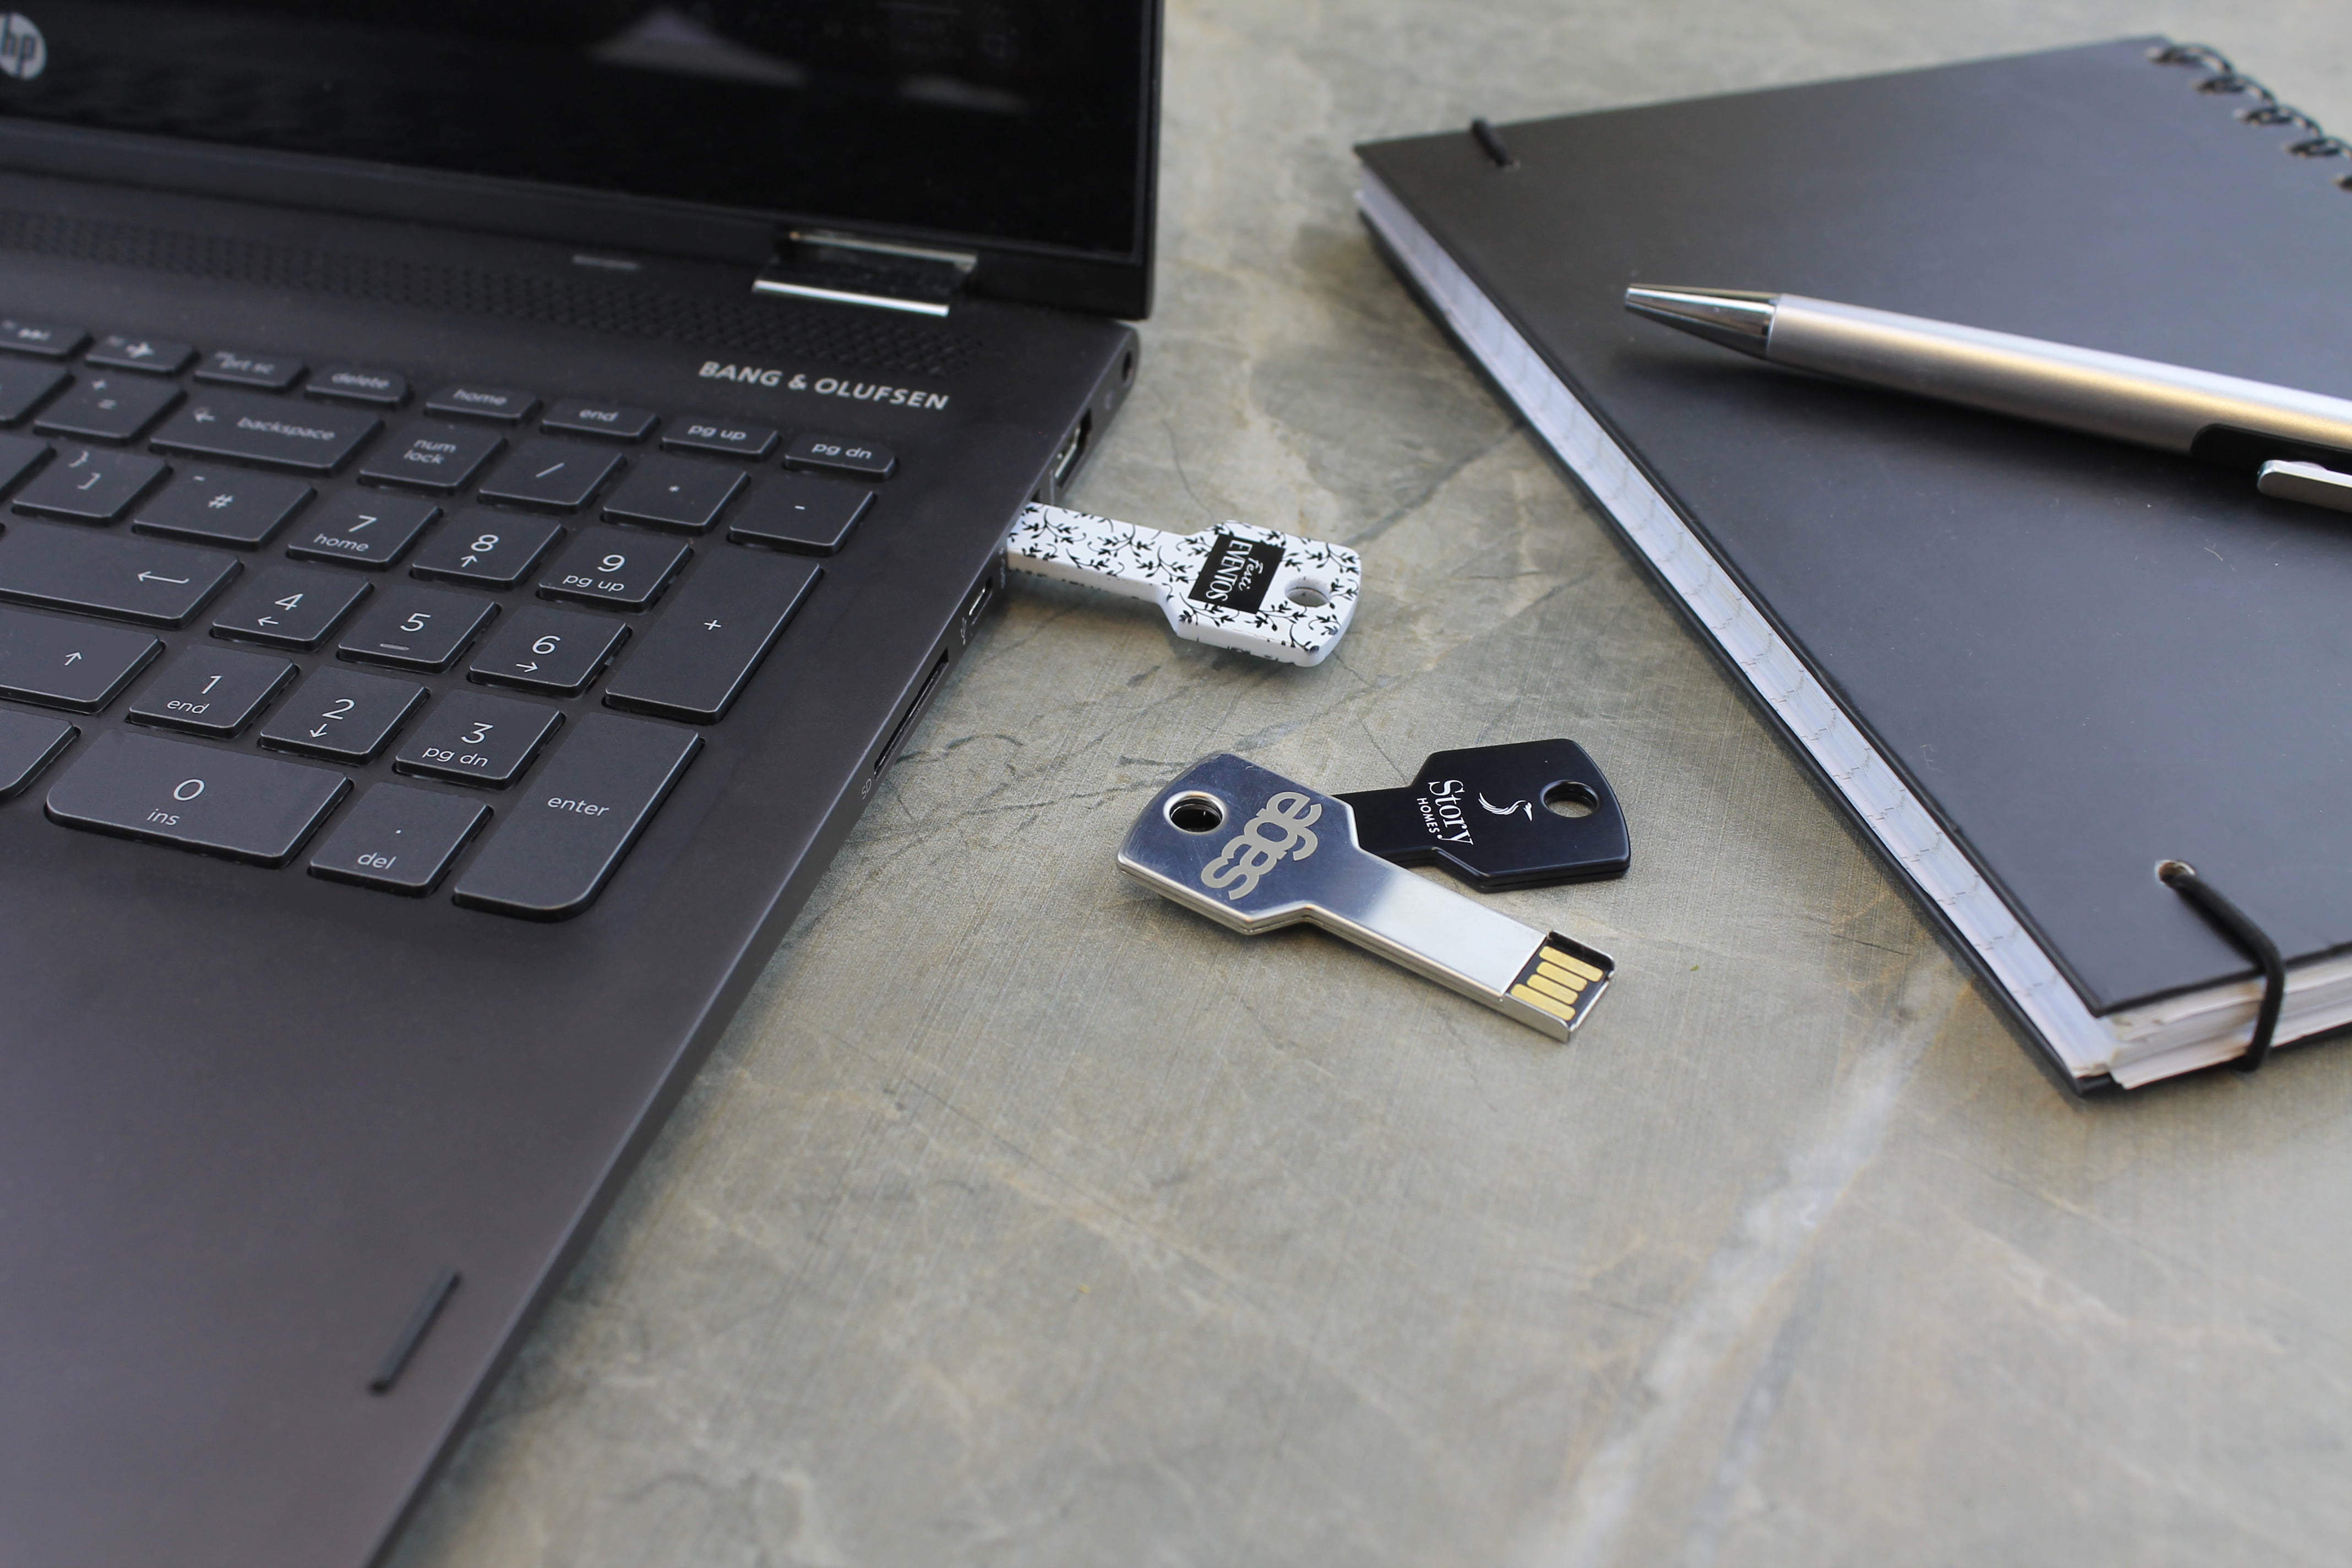 Key Branded USB Memory Stick Image 1